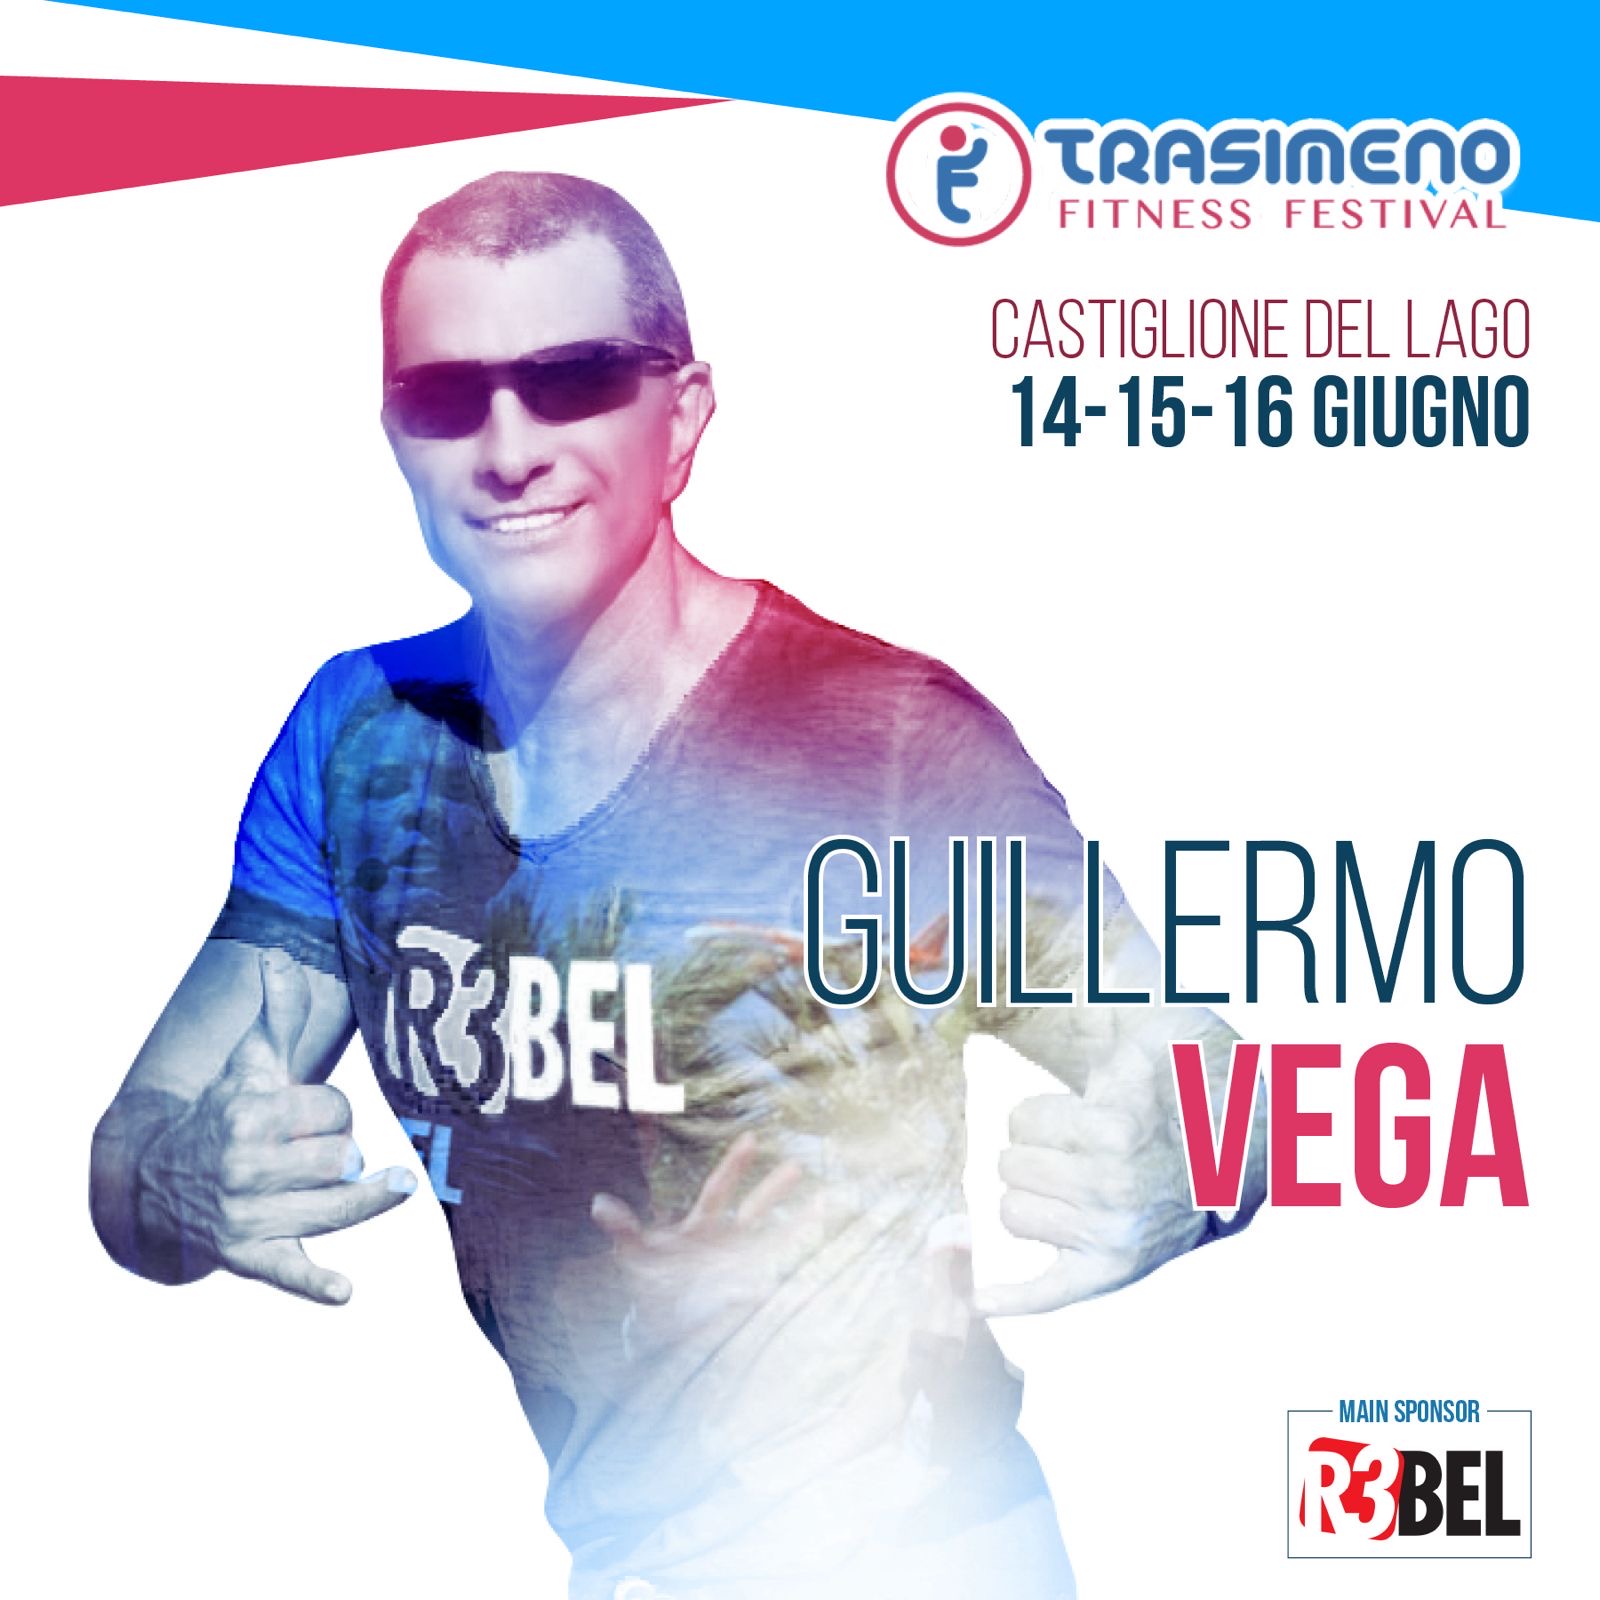 Guillermo Vega - Trasimeno Feetness Festival